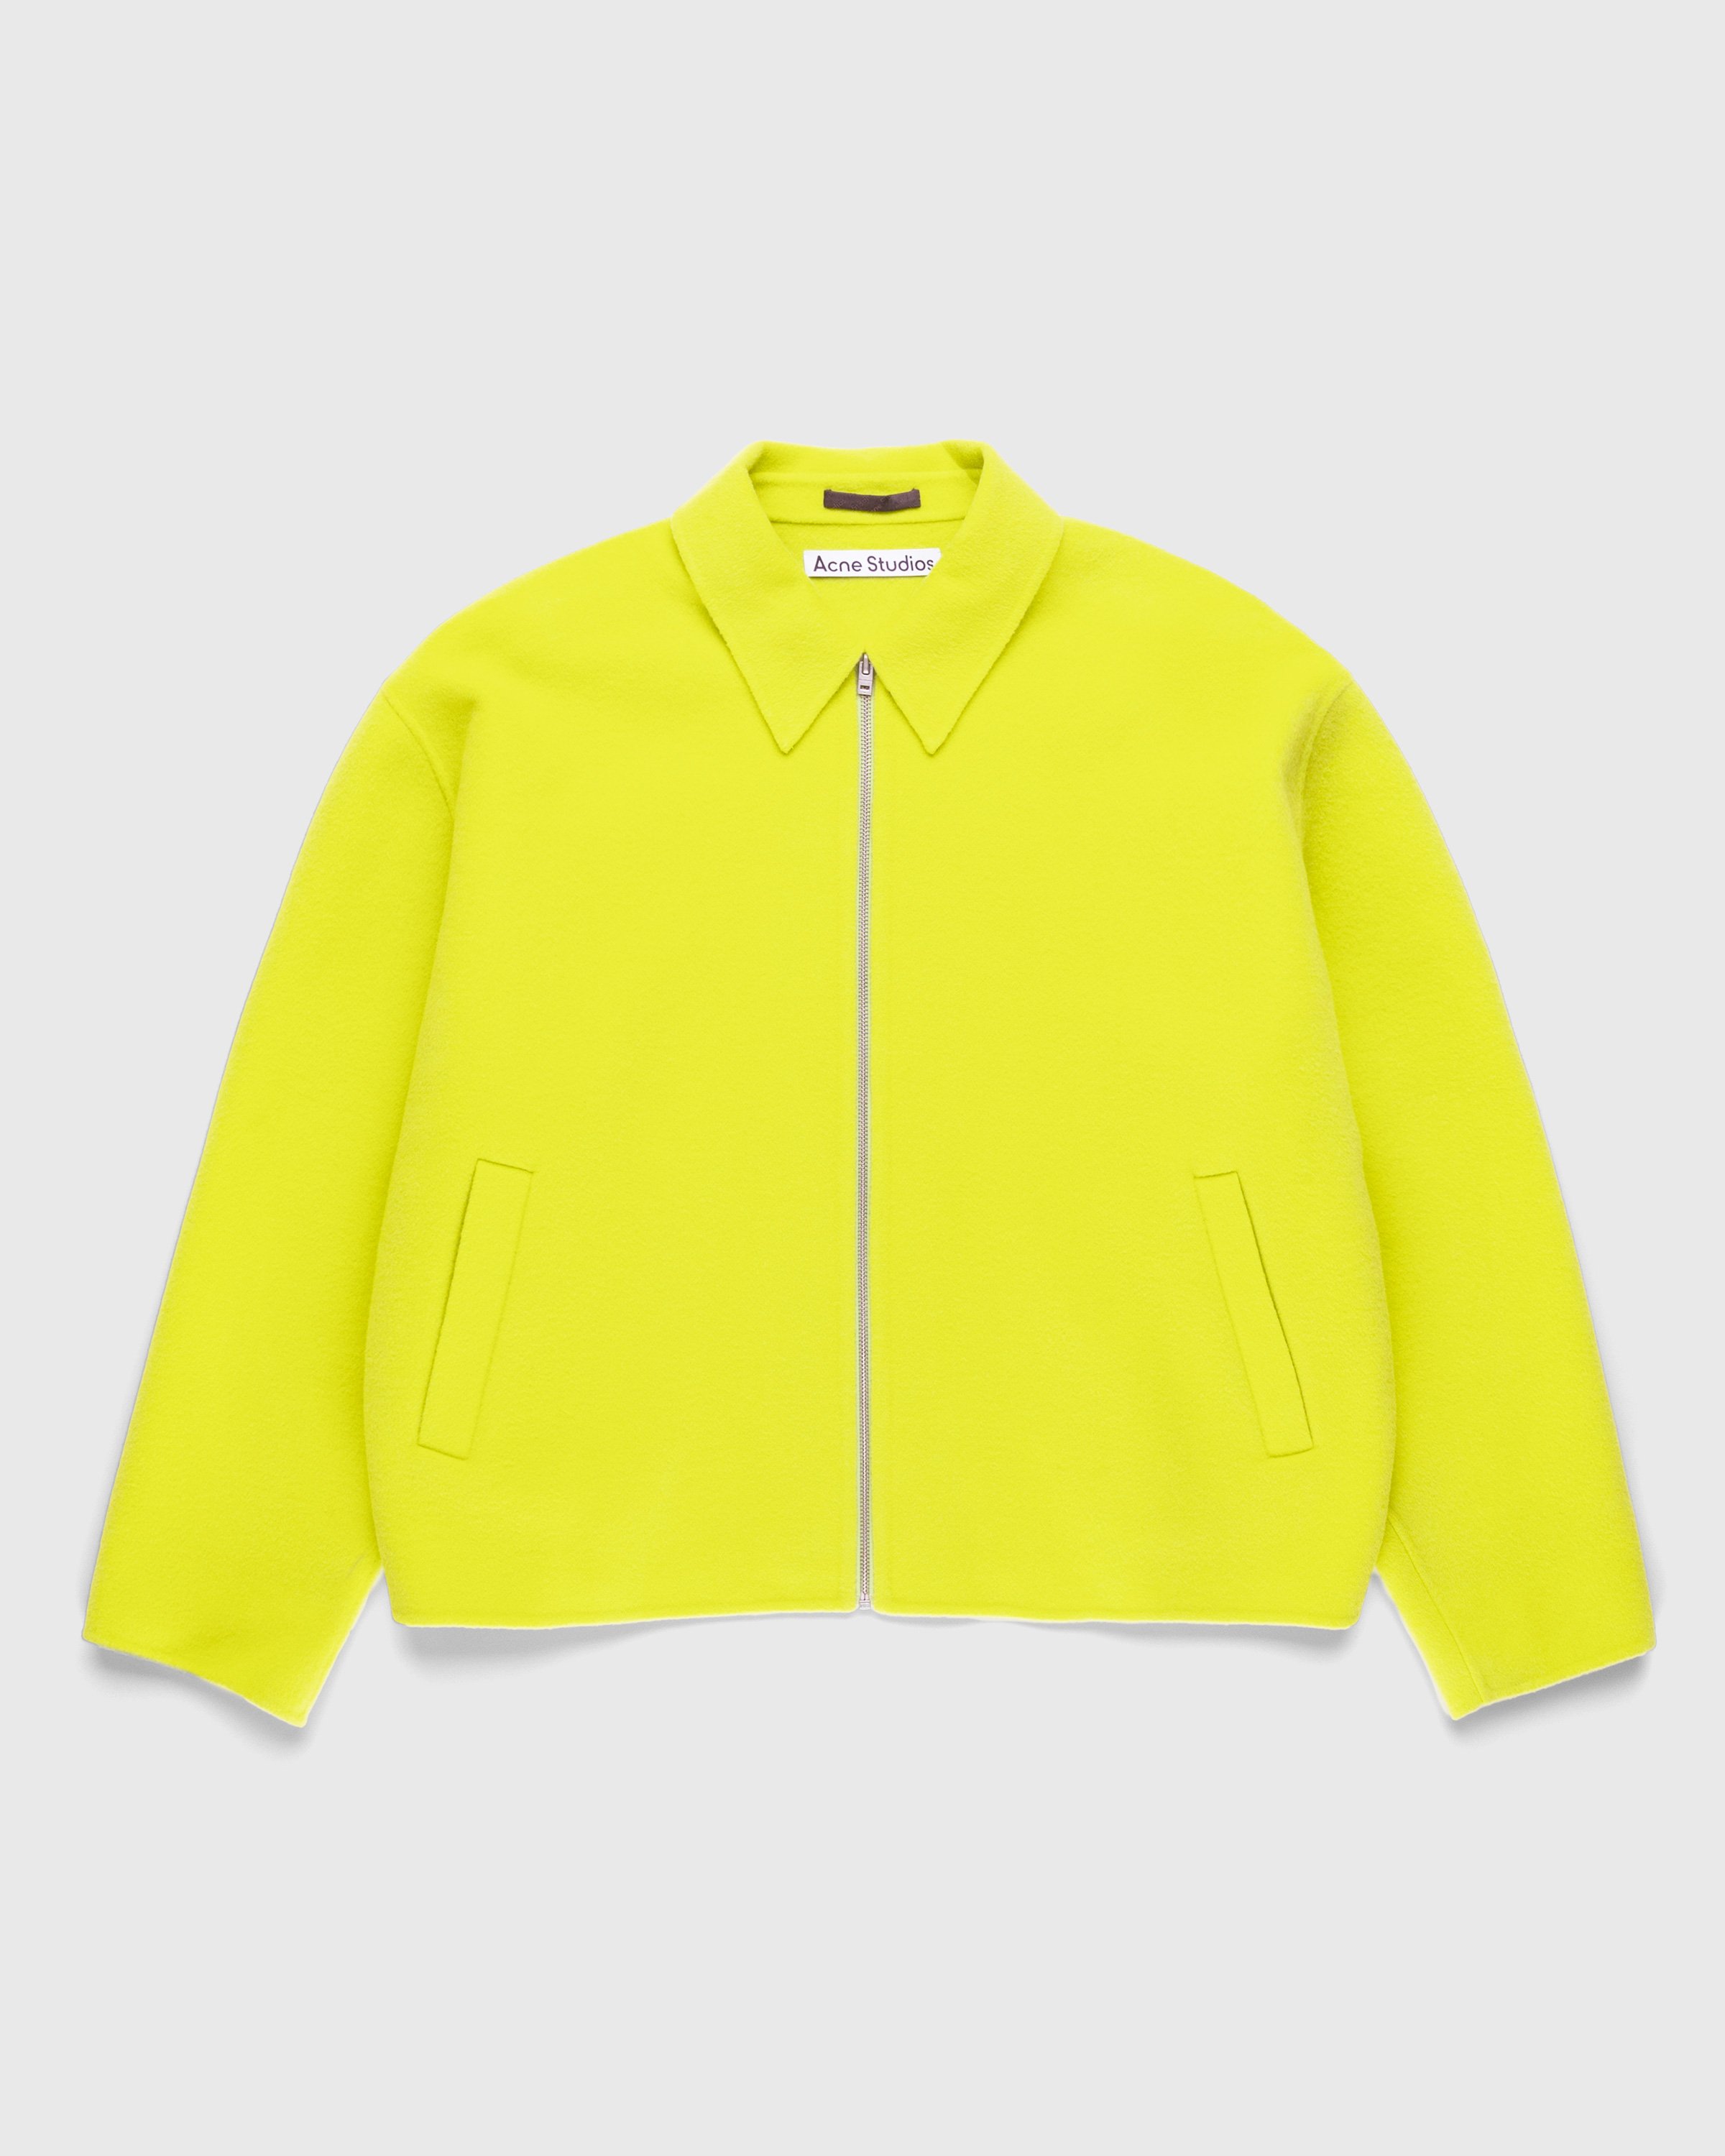 Acne Studios - Wool Zipper Jacket Lime Green - Clothing - Green - Image 1